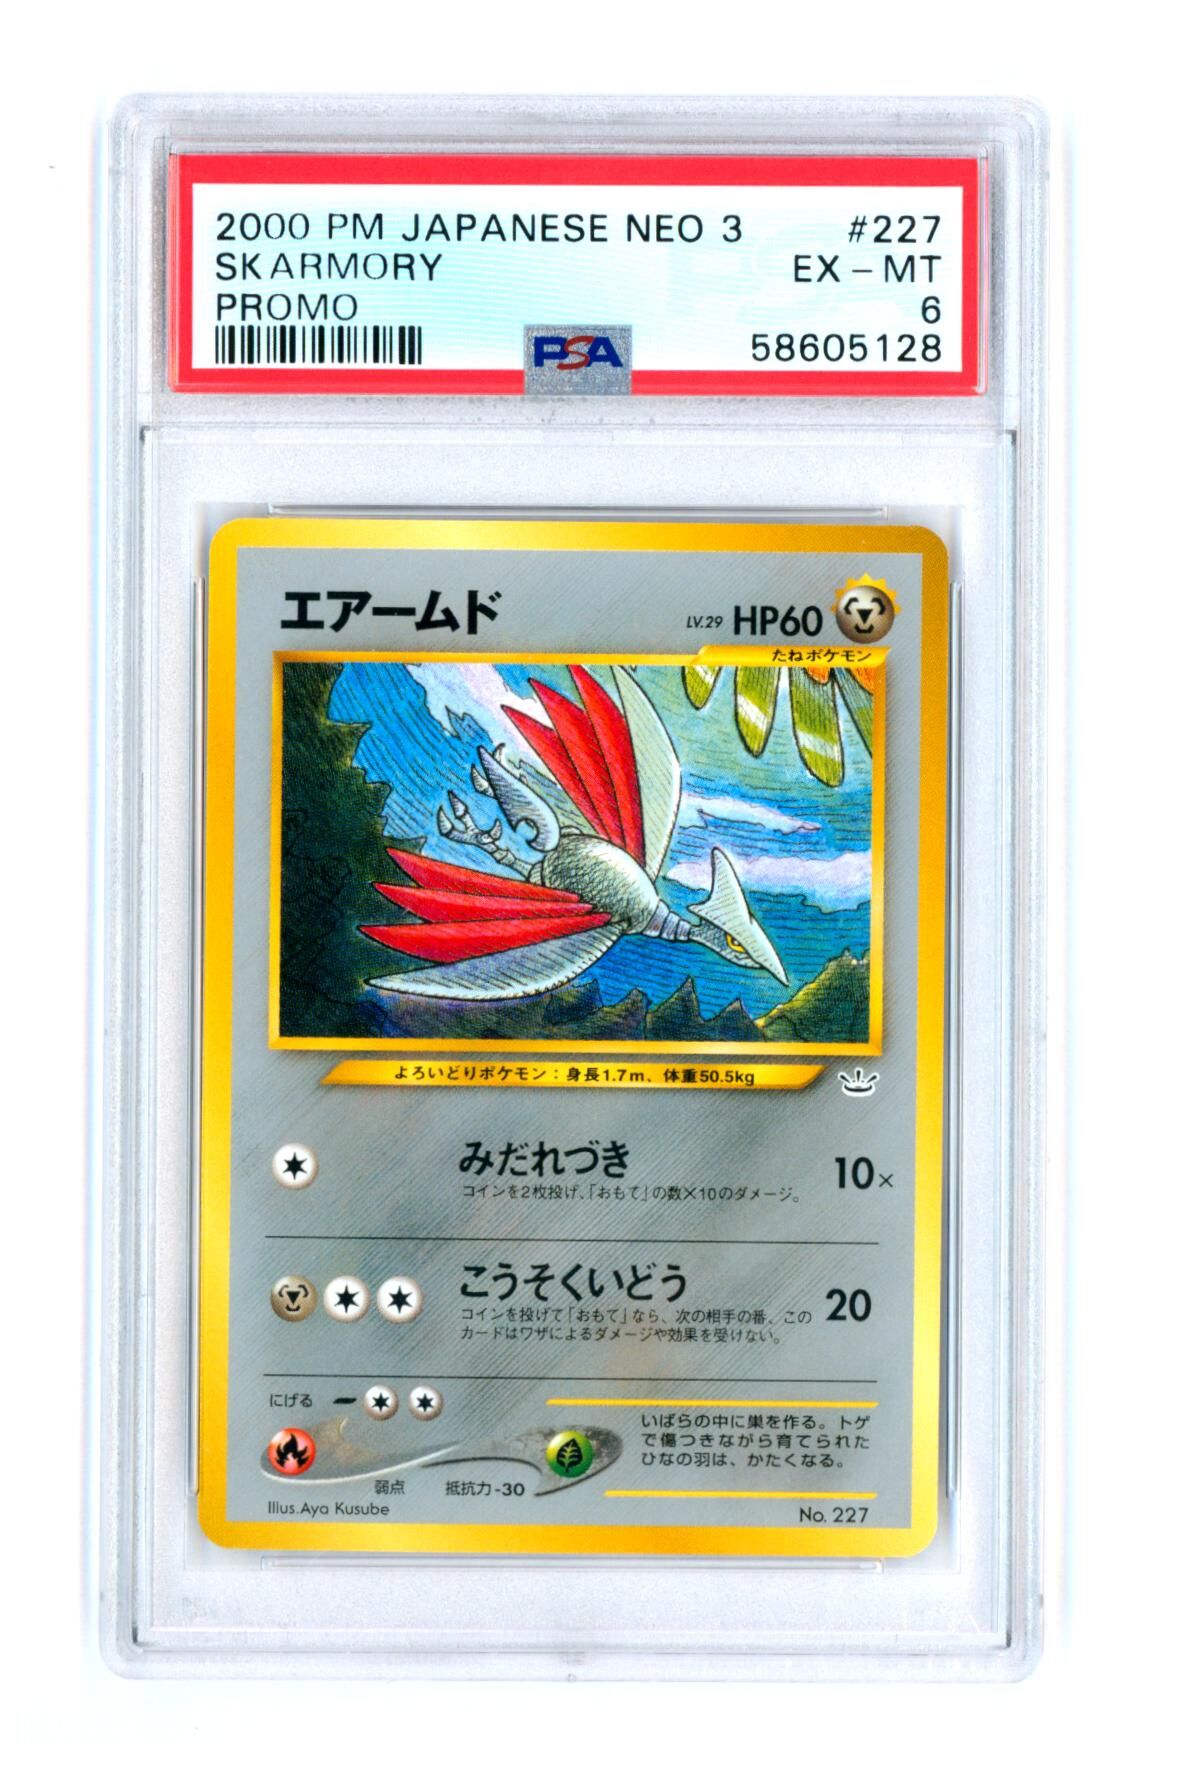 Skarmory #227 - Neo 3 - Japanese Promo - PSA 6 EX-MT - Pokémon